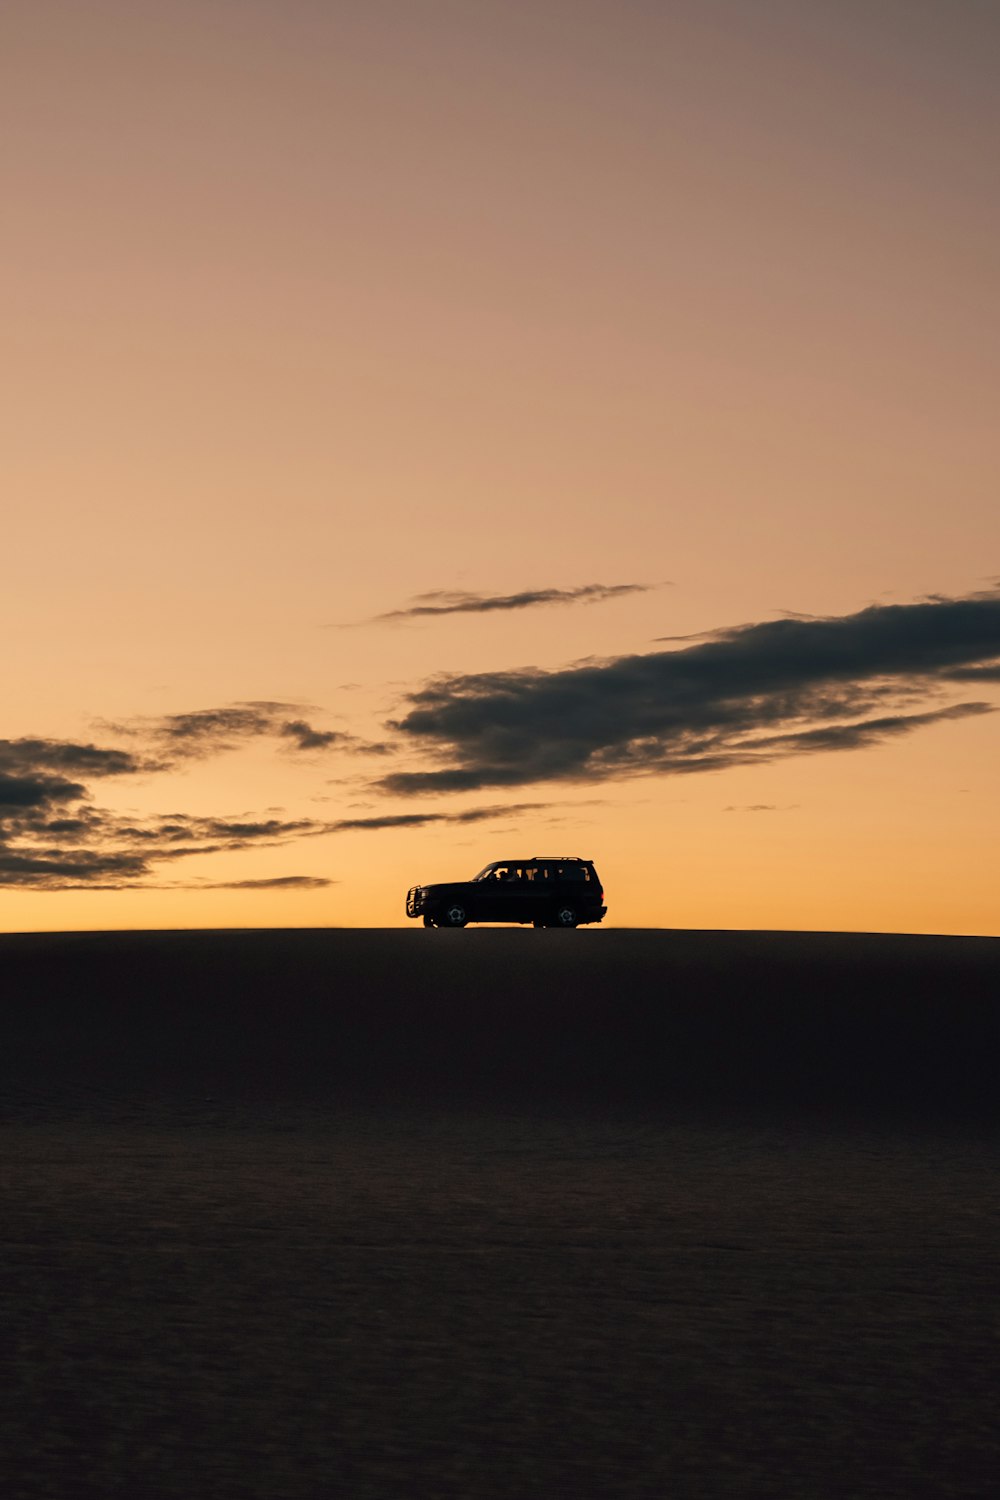 silhouette of van on seashore during sunset